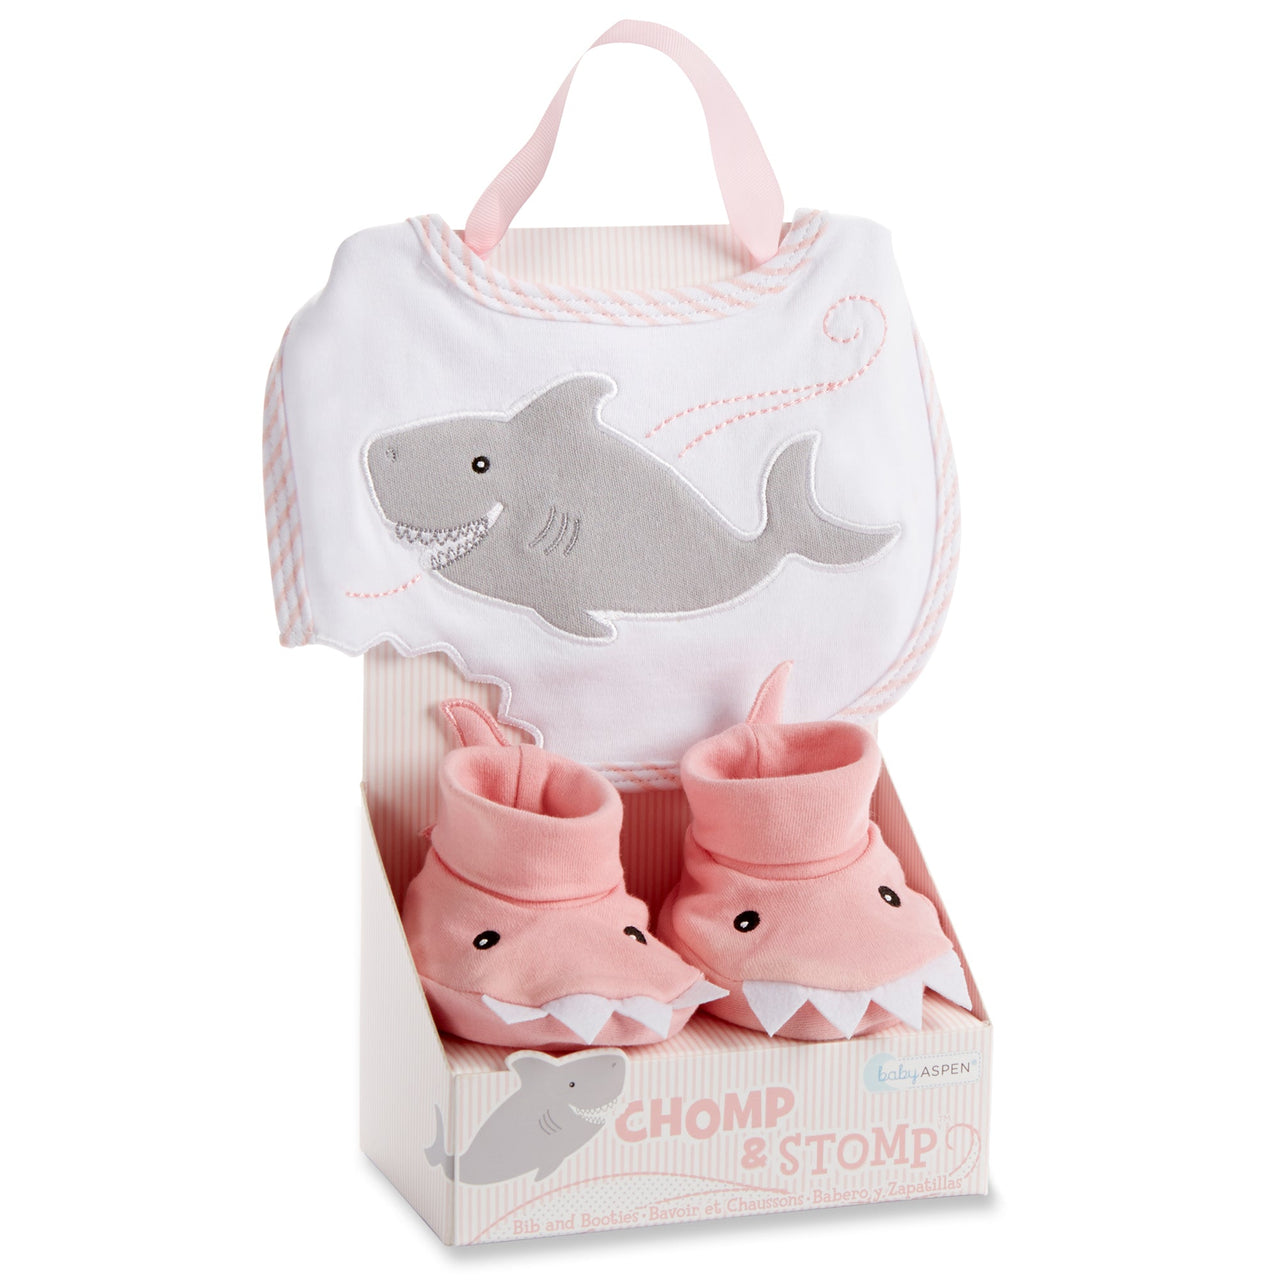 Chomp & Stomp Shark Bib & Booties Gift Set (Pink)